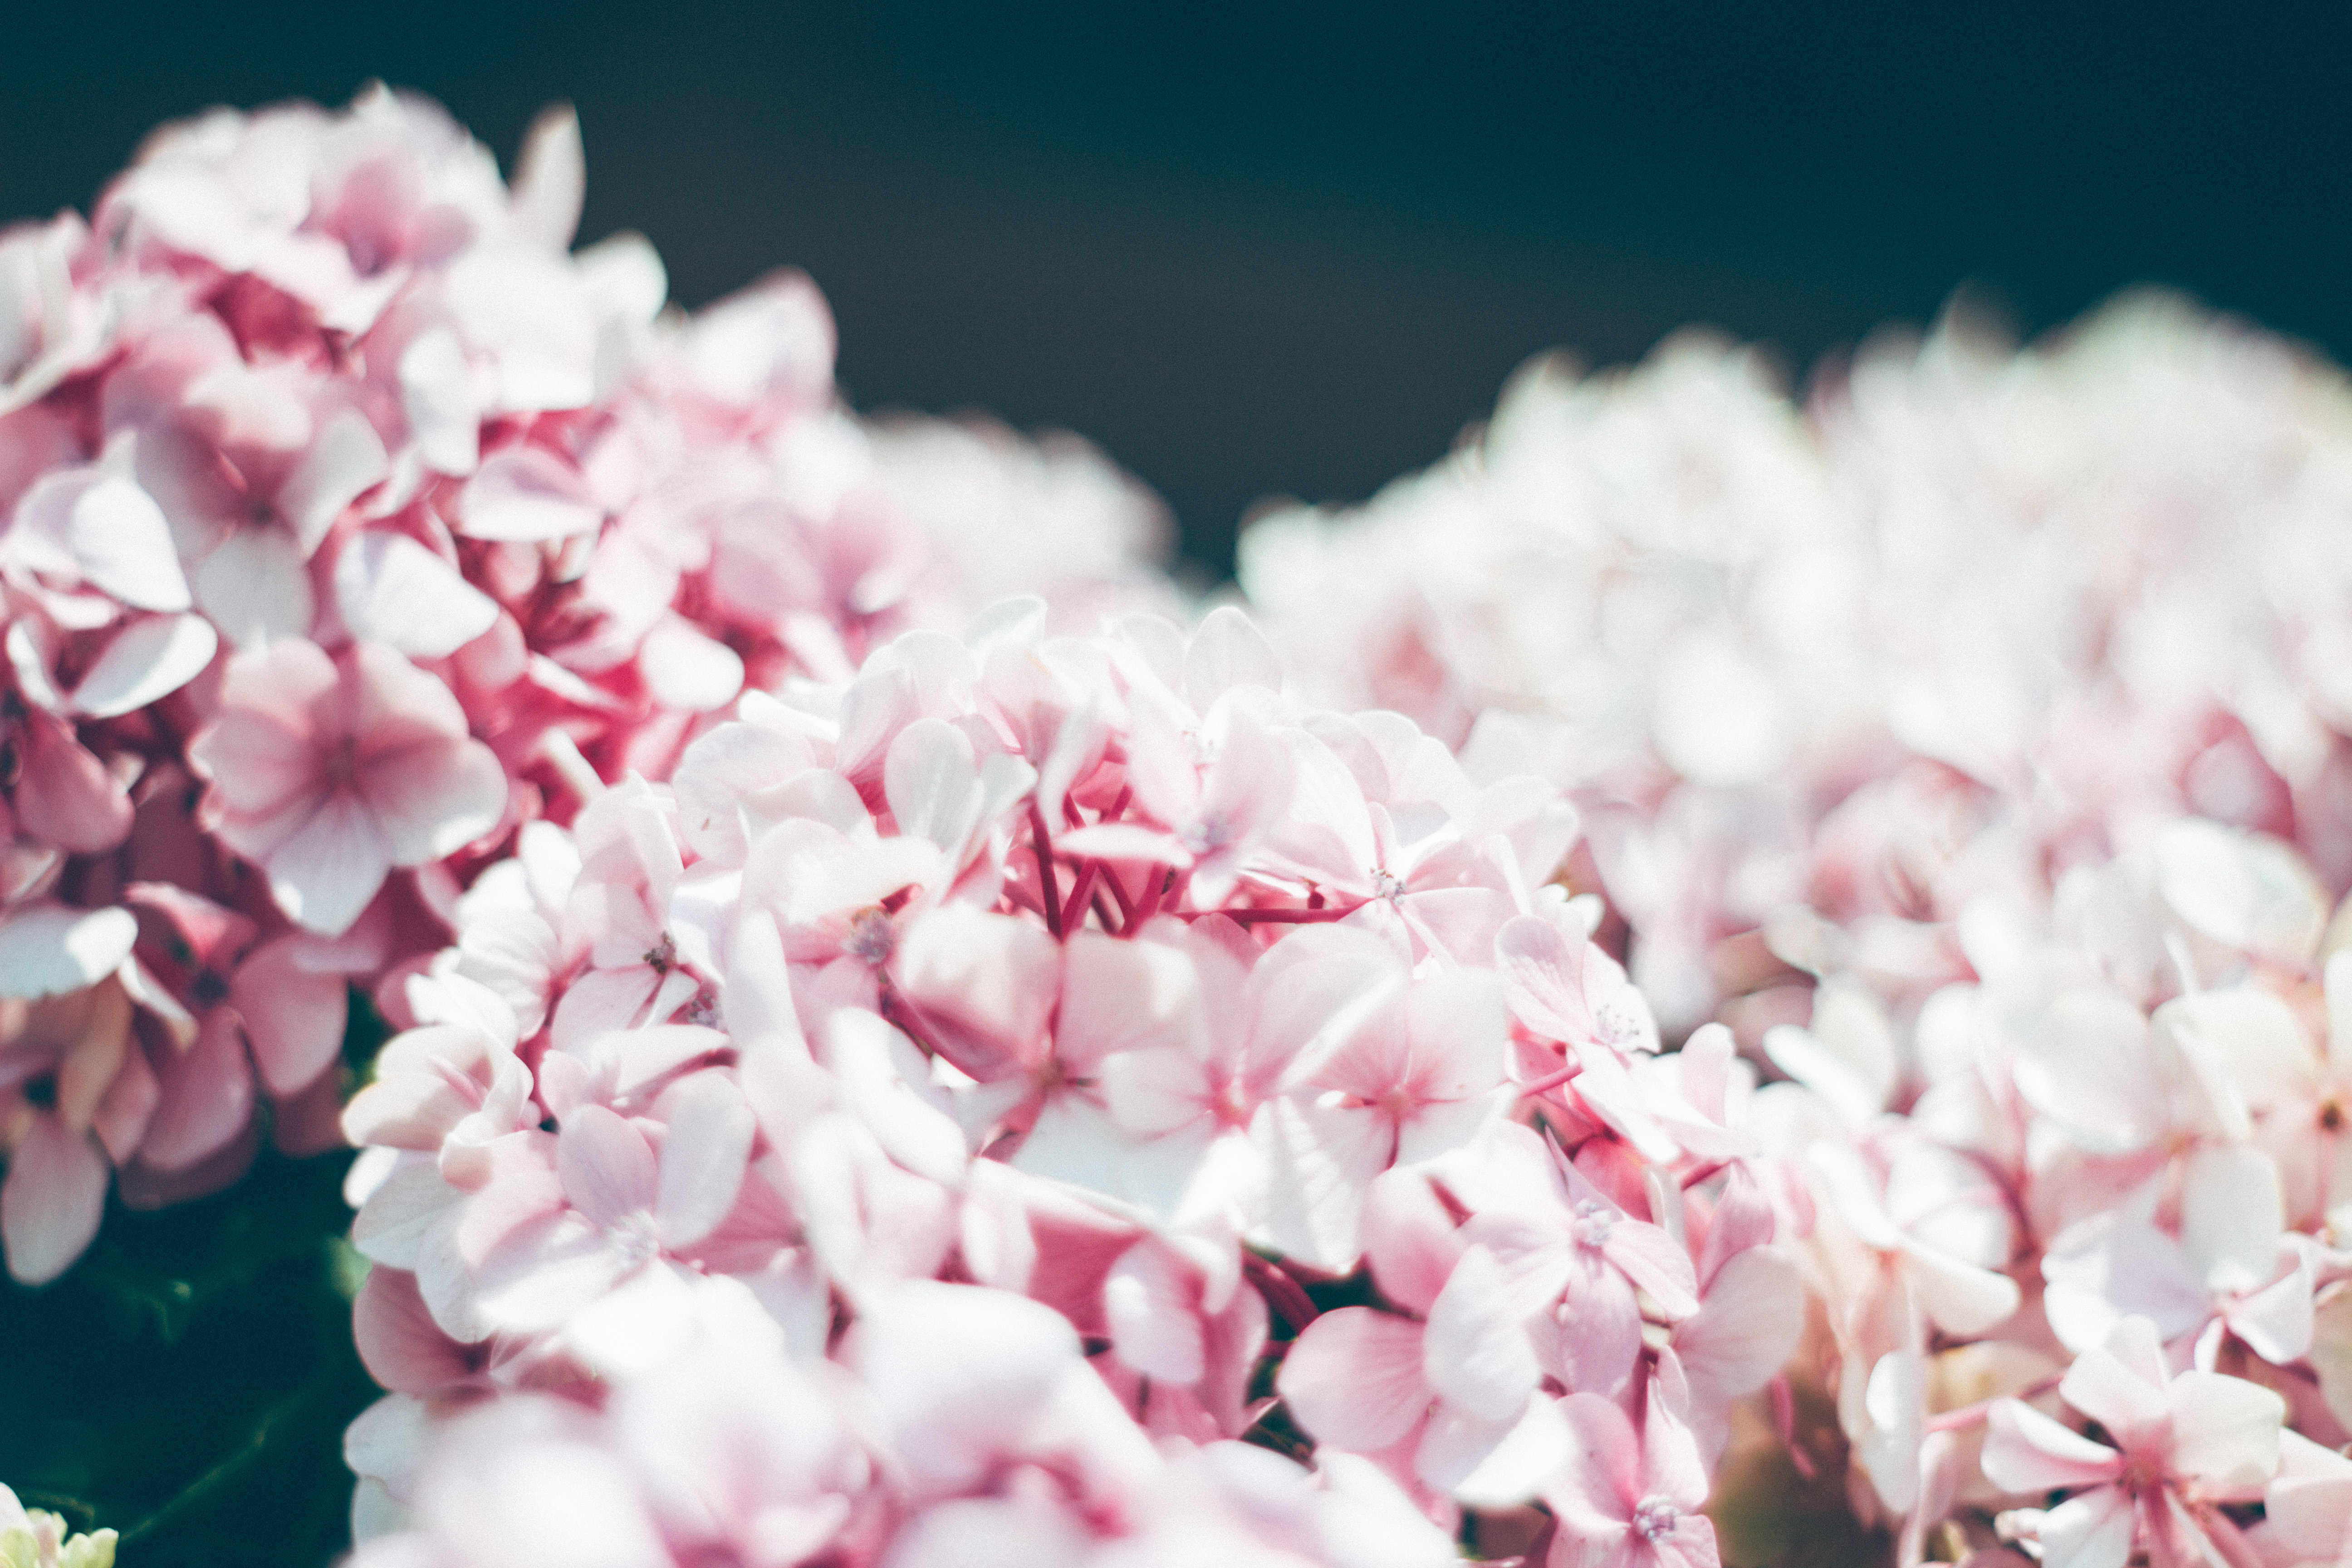 hydrangea, flowers, petals, close up